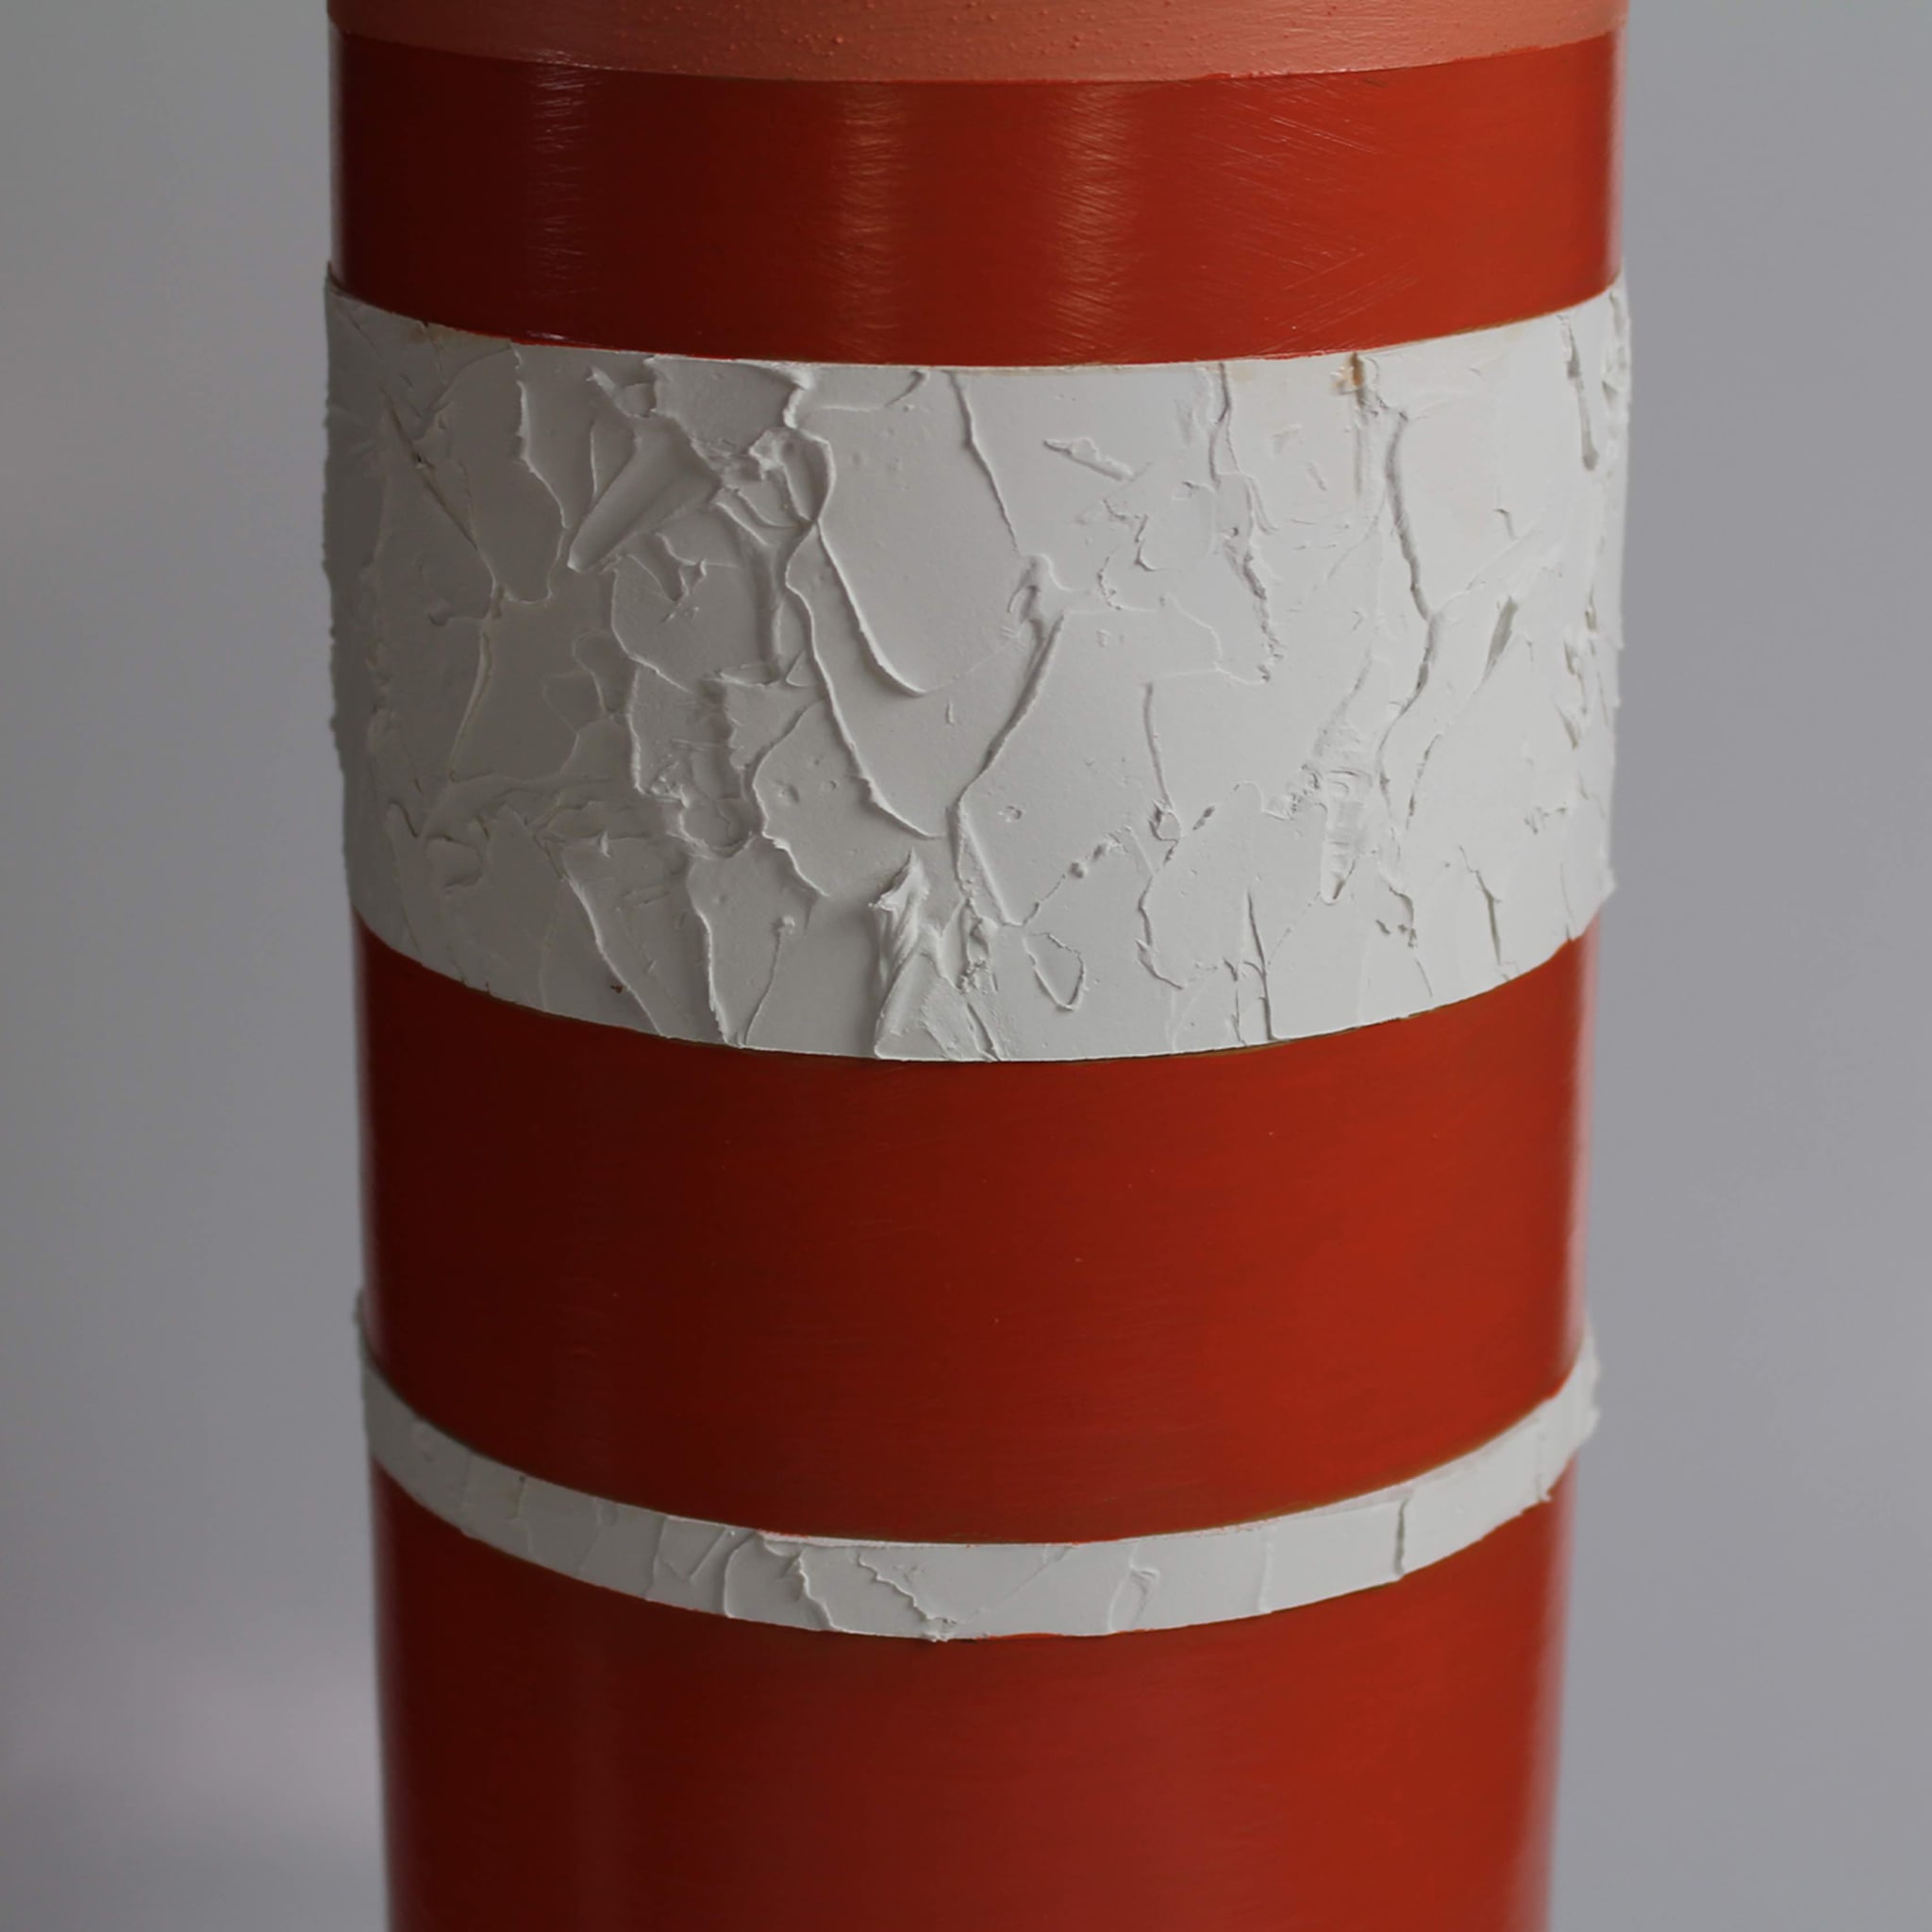 Red & White Vase 24 by Mascia Meccani - Alternative view 2